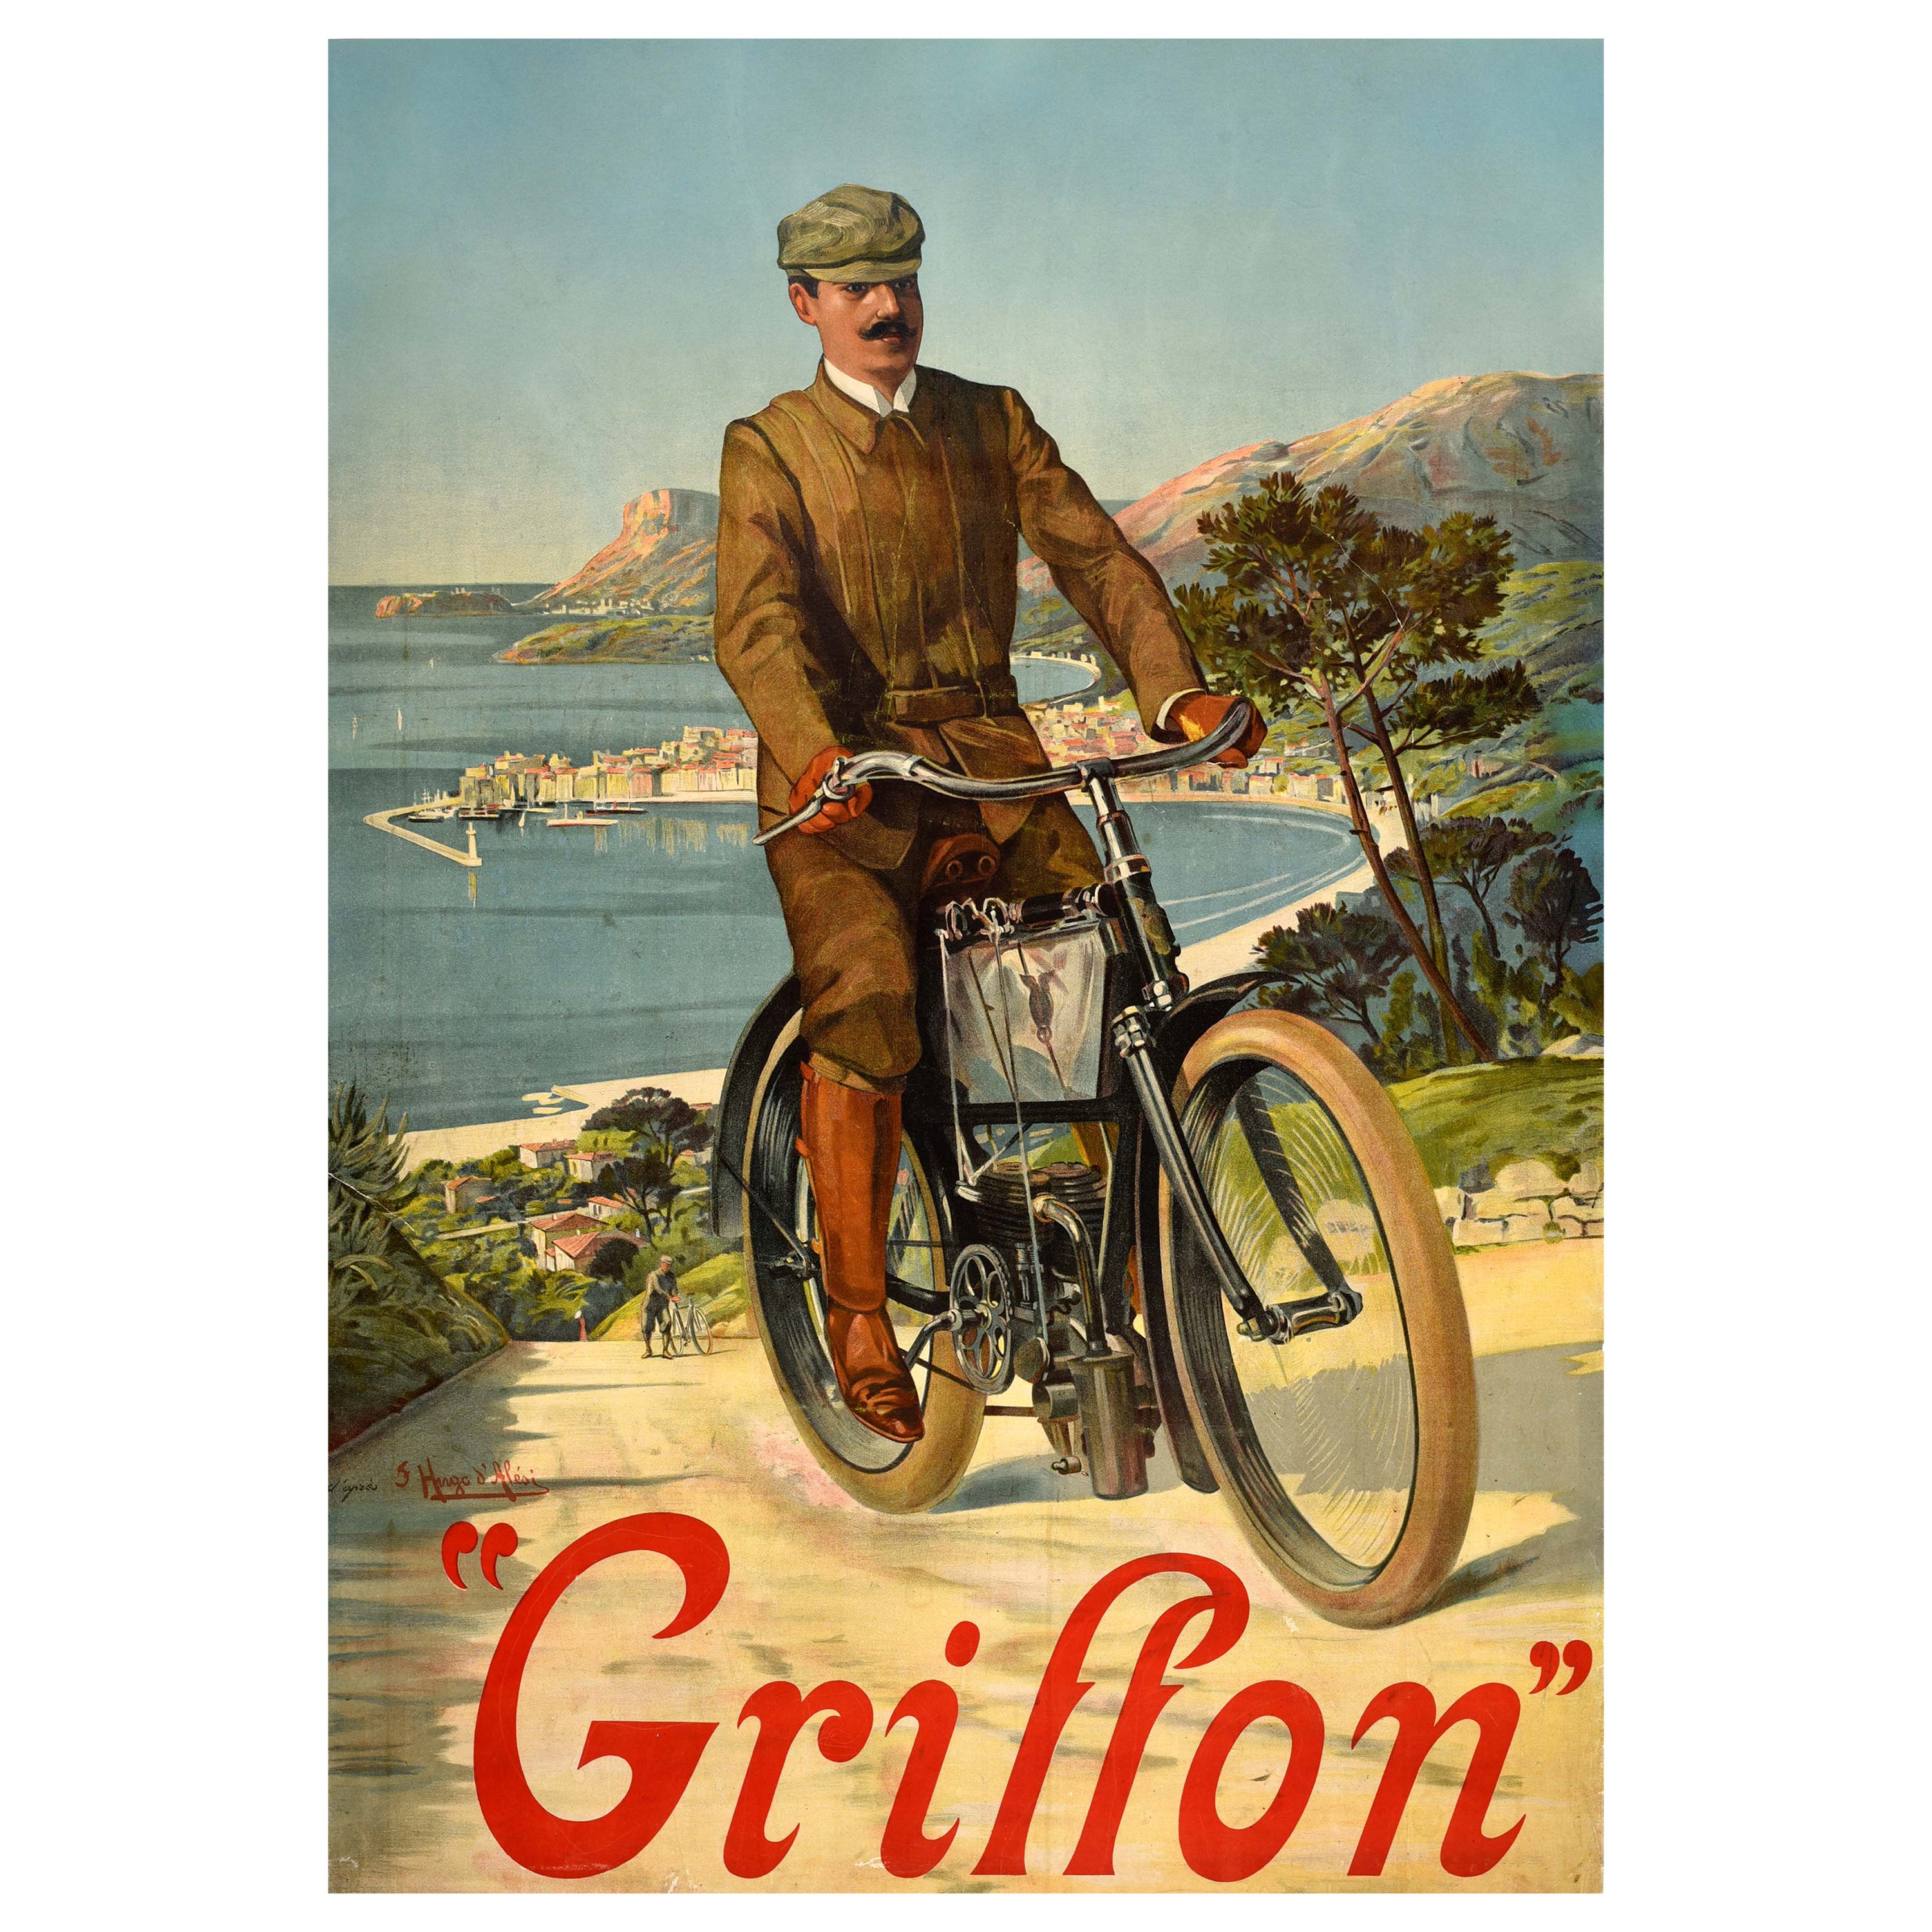 Original Antique Advertising Poster Griffon Motorcycle Bike France Design Art For Sale